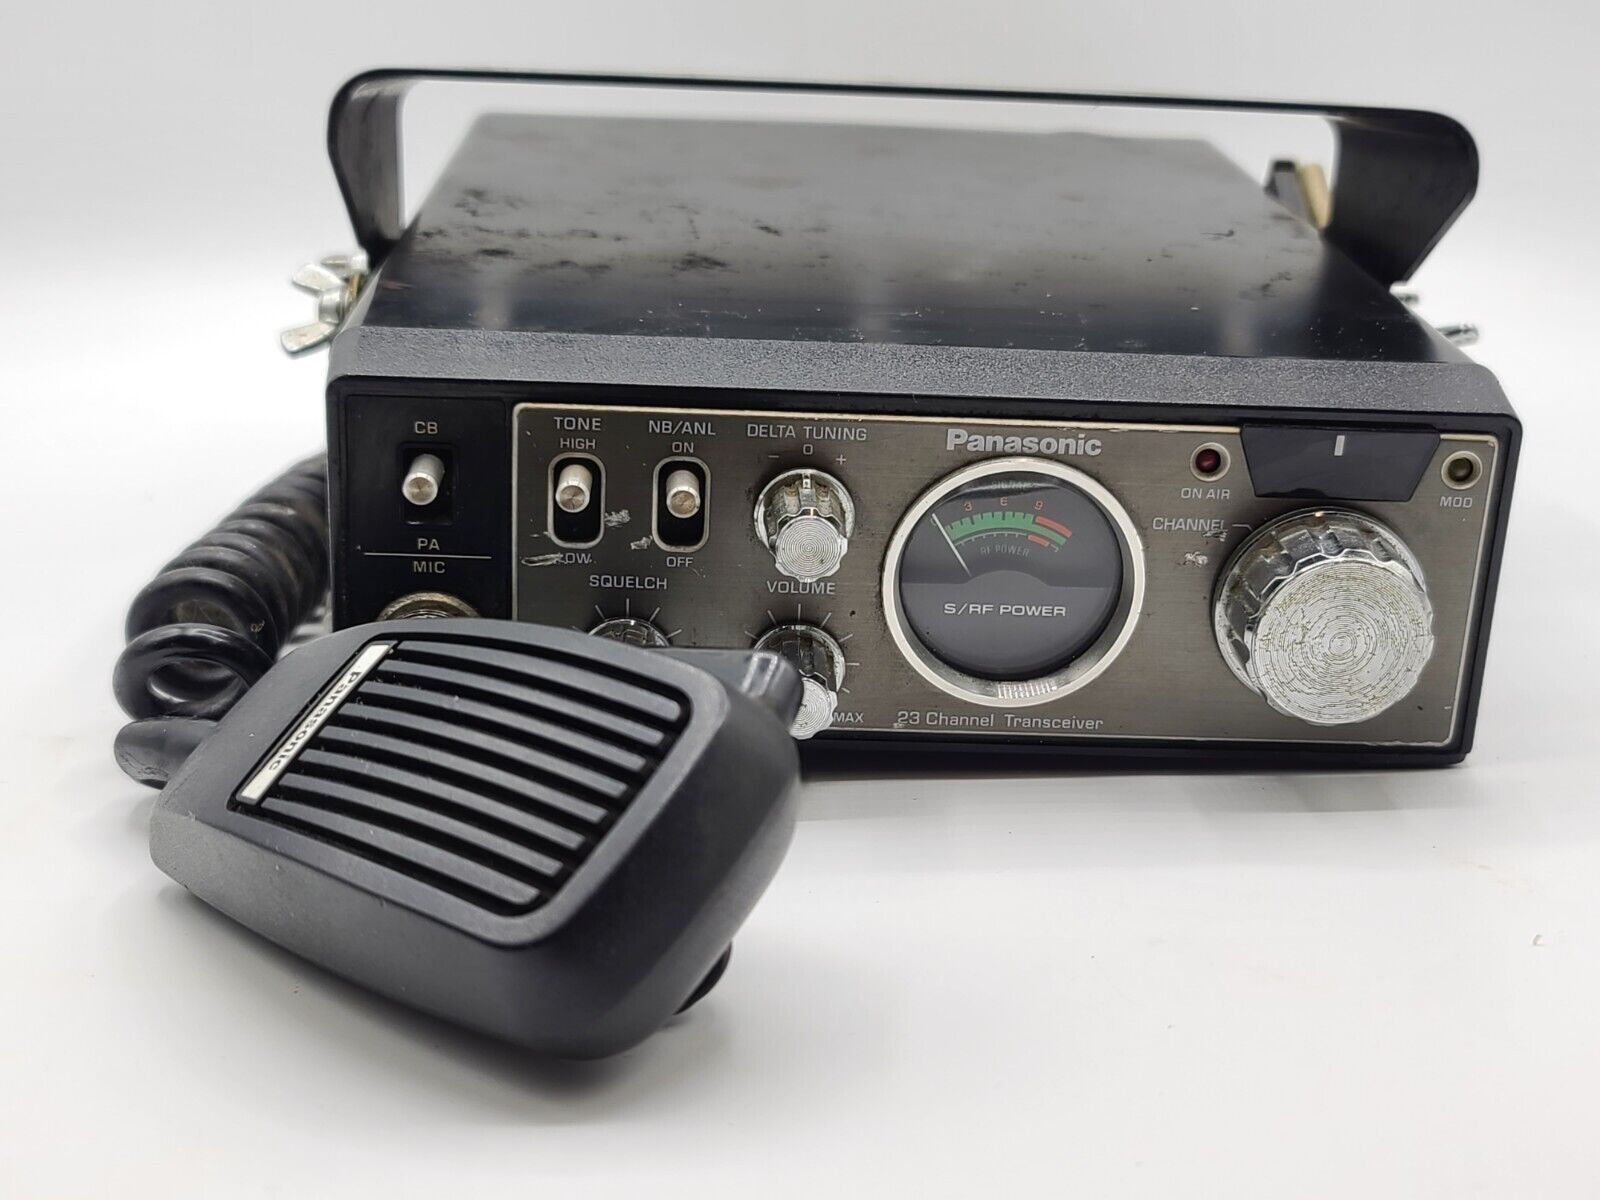 Vintage Panasonic RJ-3200 CB Radio 23 Channel Transceiver w/Mic and Bracket